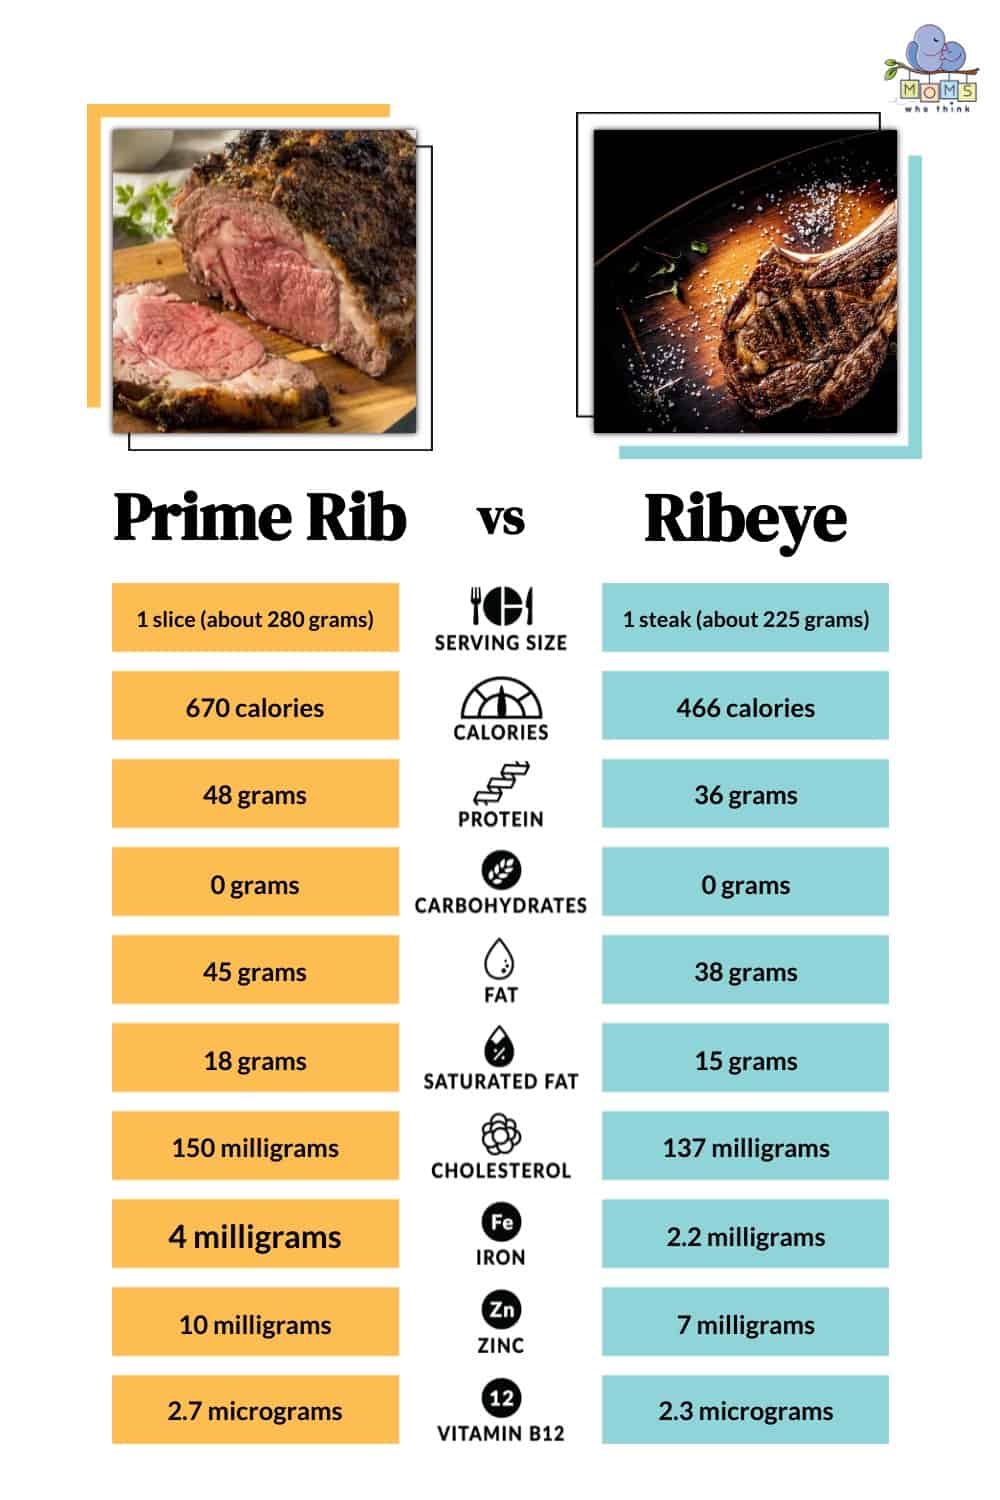 Prime Rib vs Ribeye Nutritional Facts